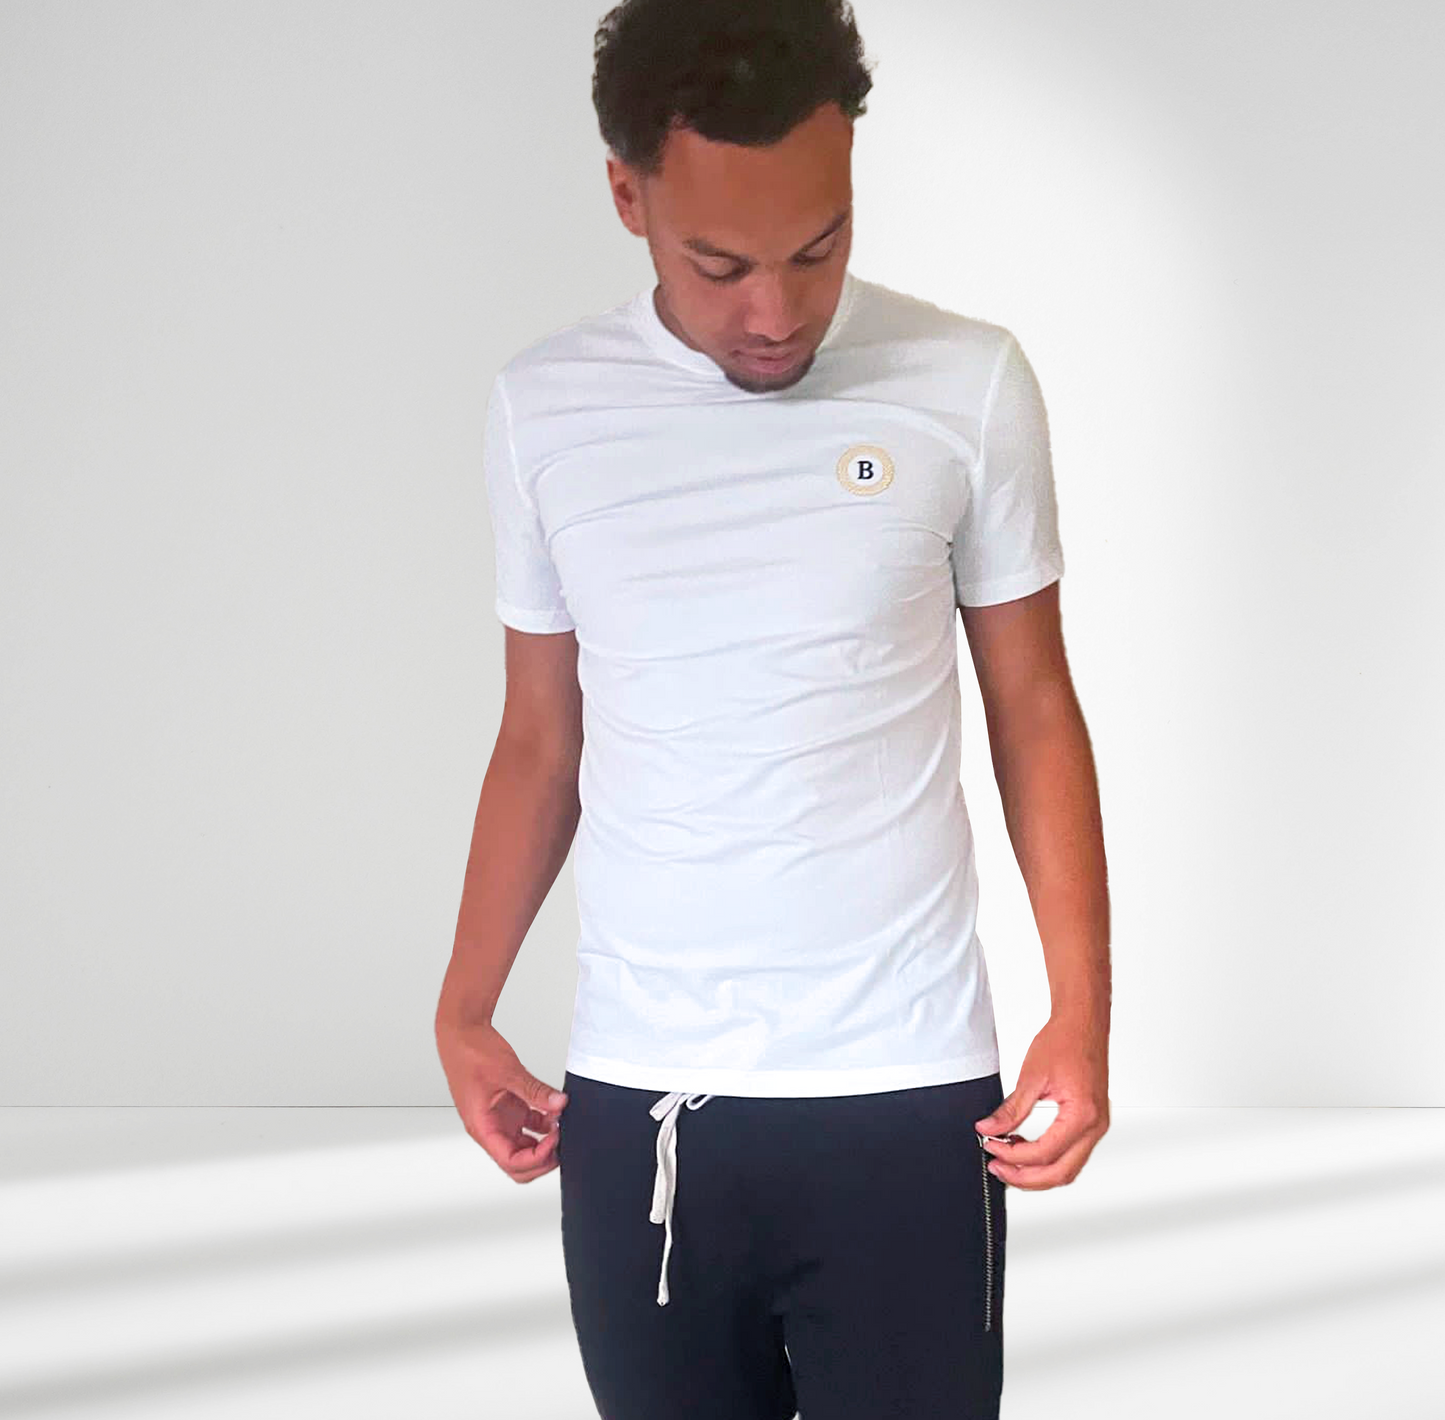 Balling London White Plain T-Shirt High Quality Luxurious Soft Slim Fit